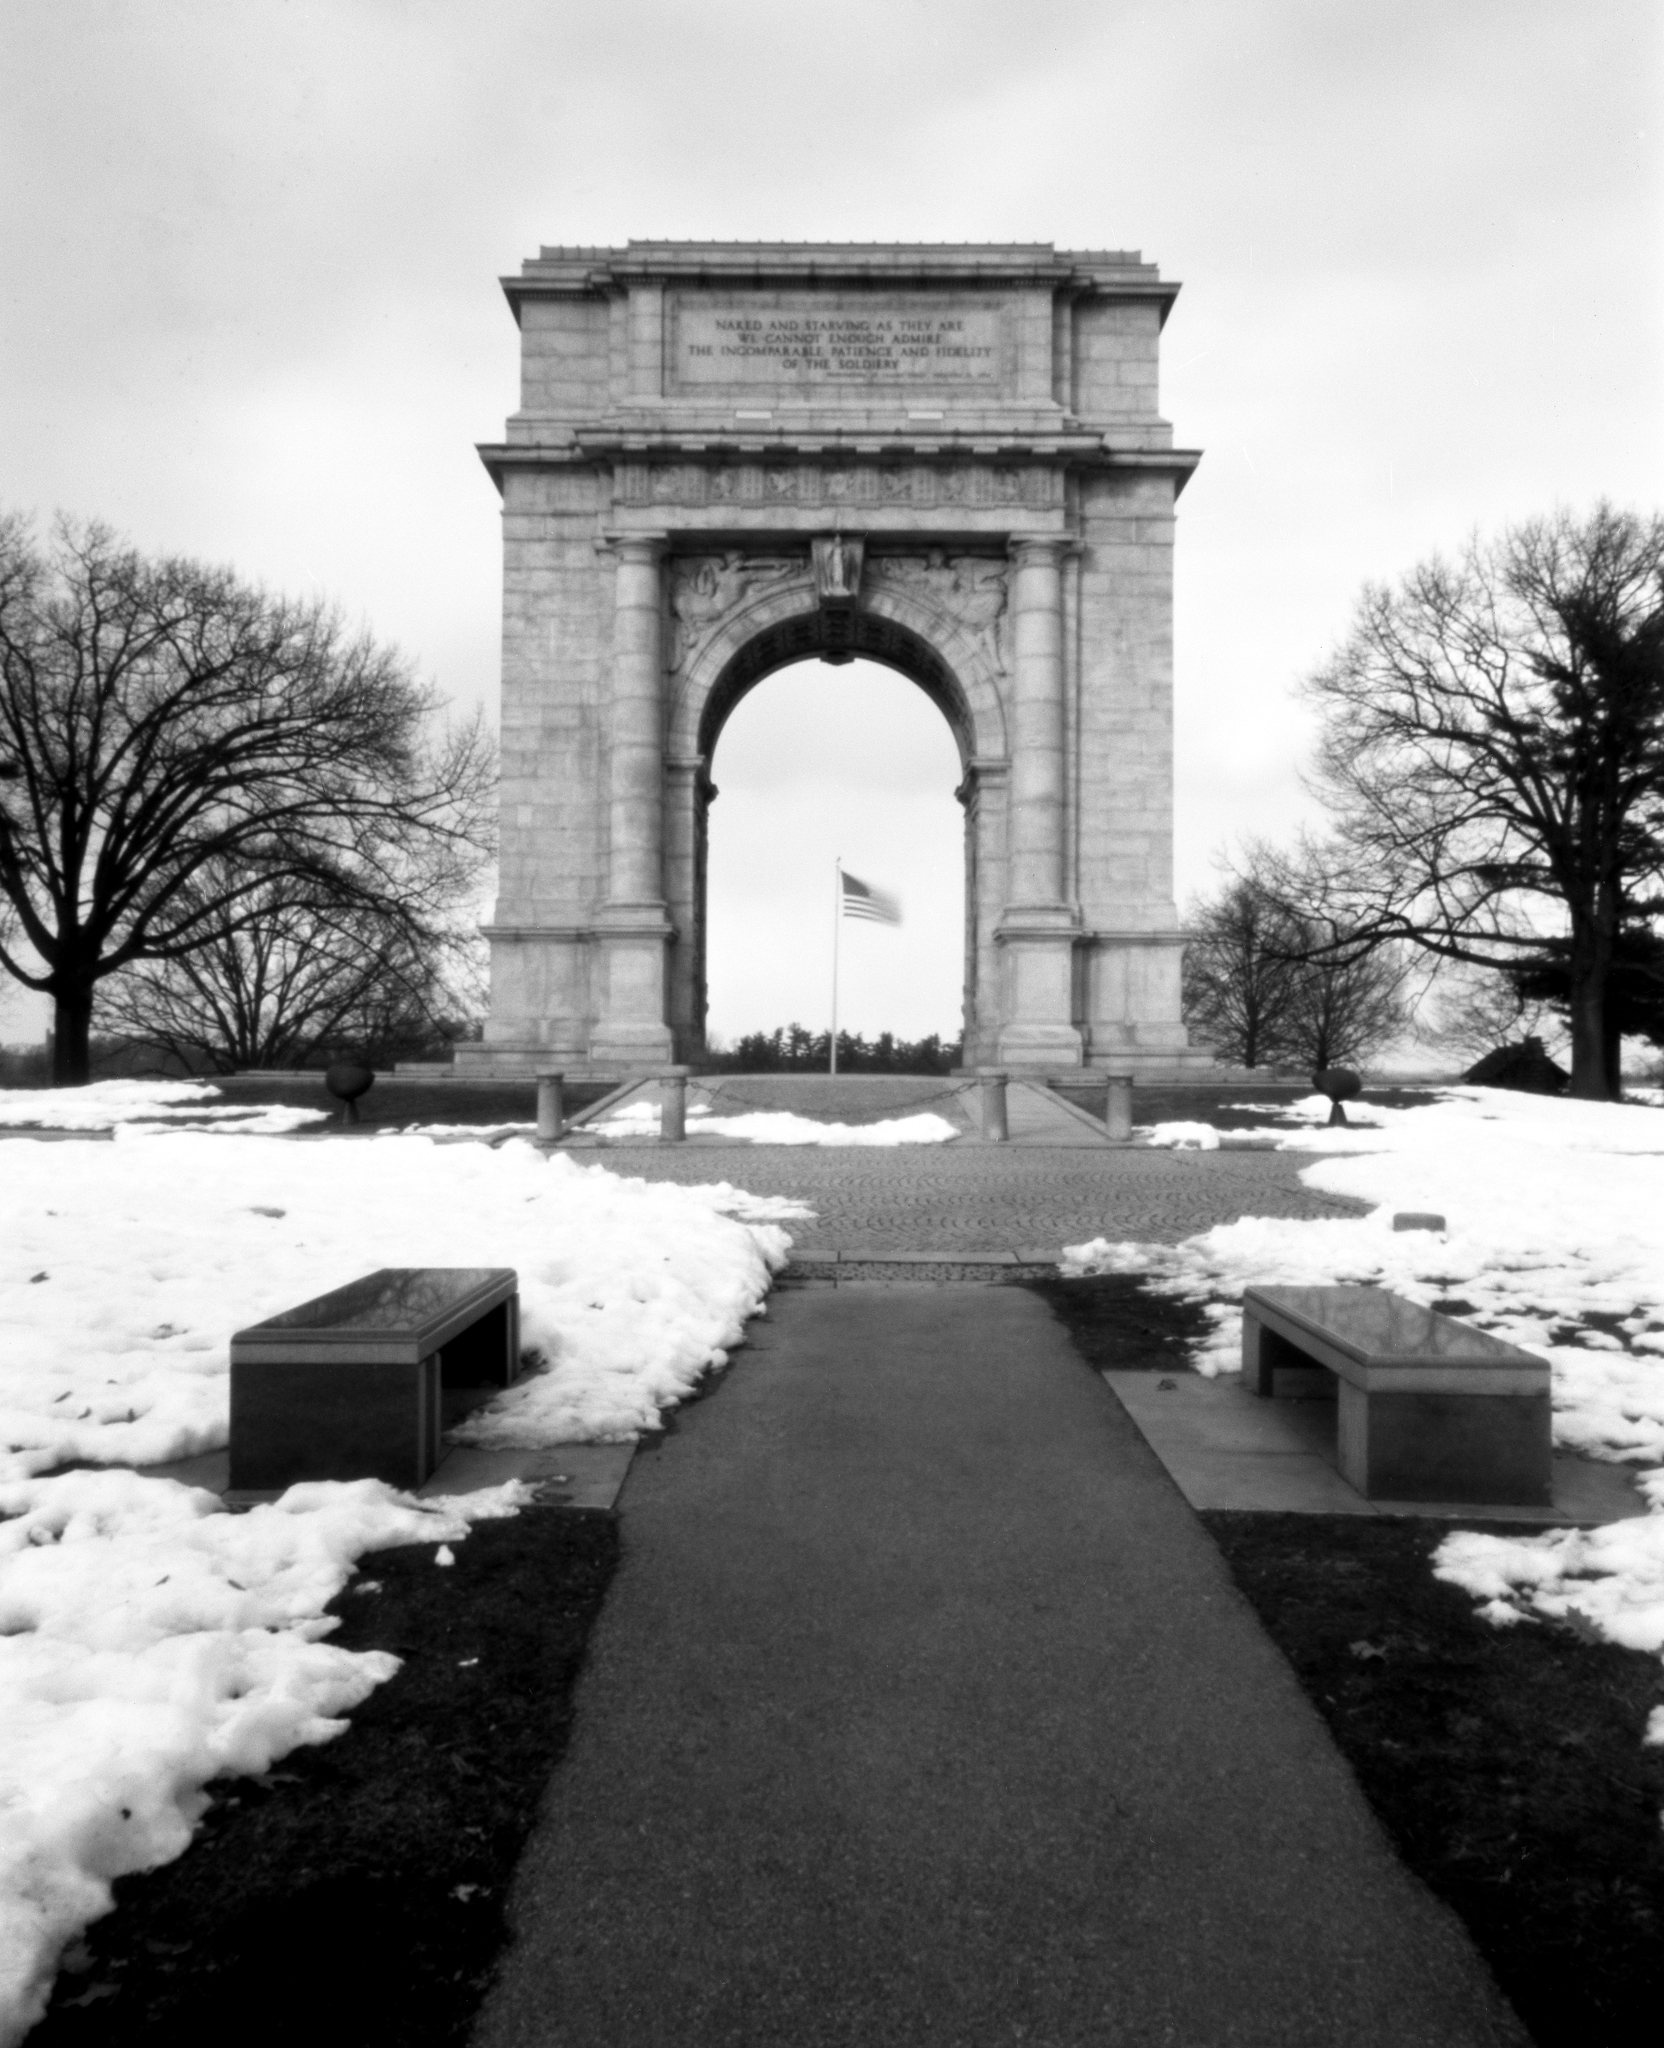  Valley Forge Memorial Arch.&nbsp; Valley Forge, Pennsylvania.&nbsp; Rob Kauzlarich built 90mm 4x5. 